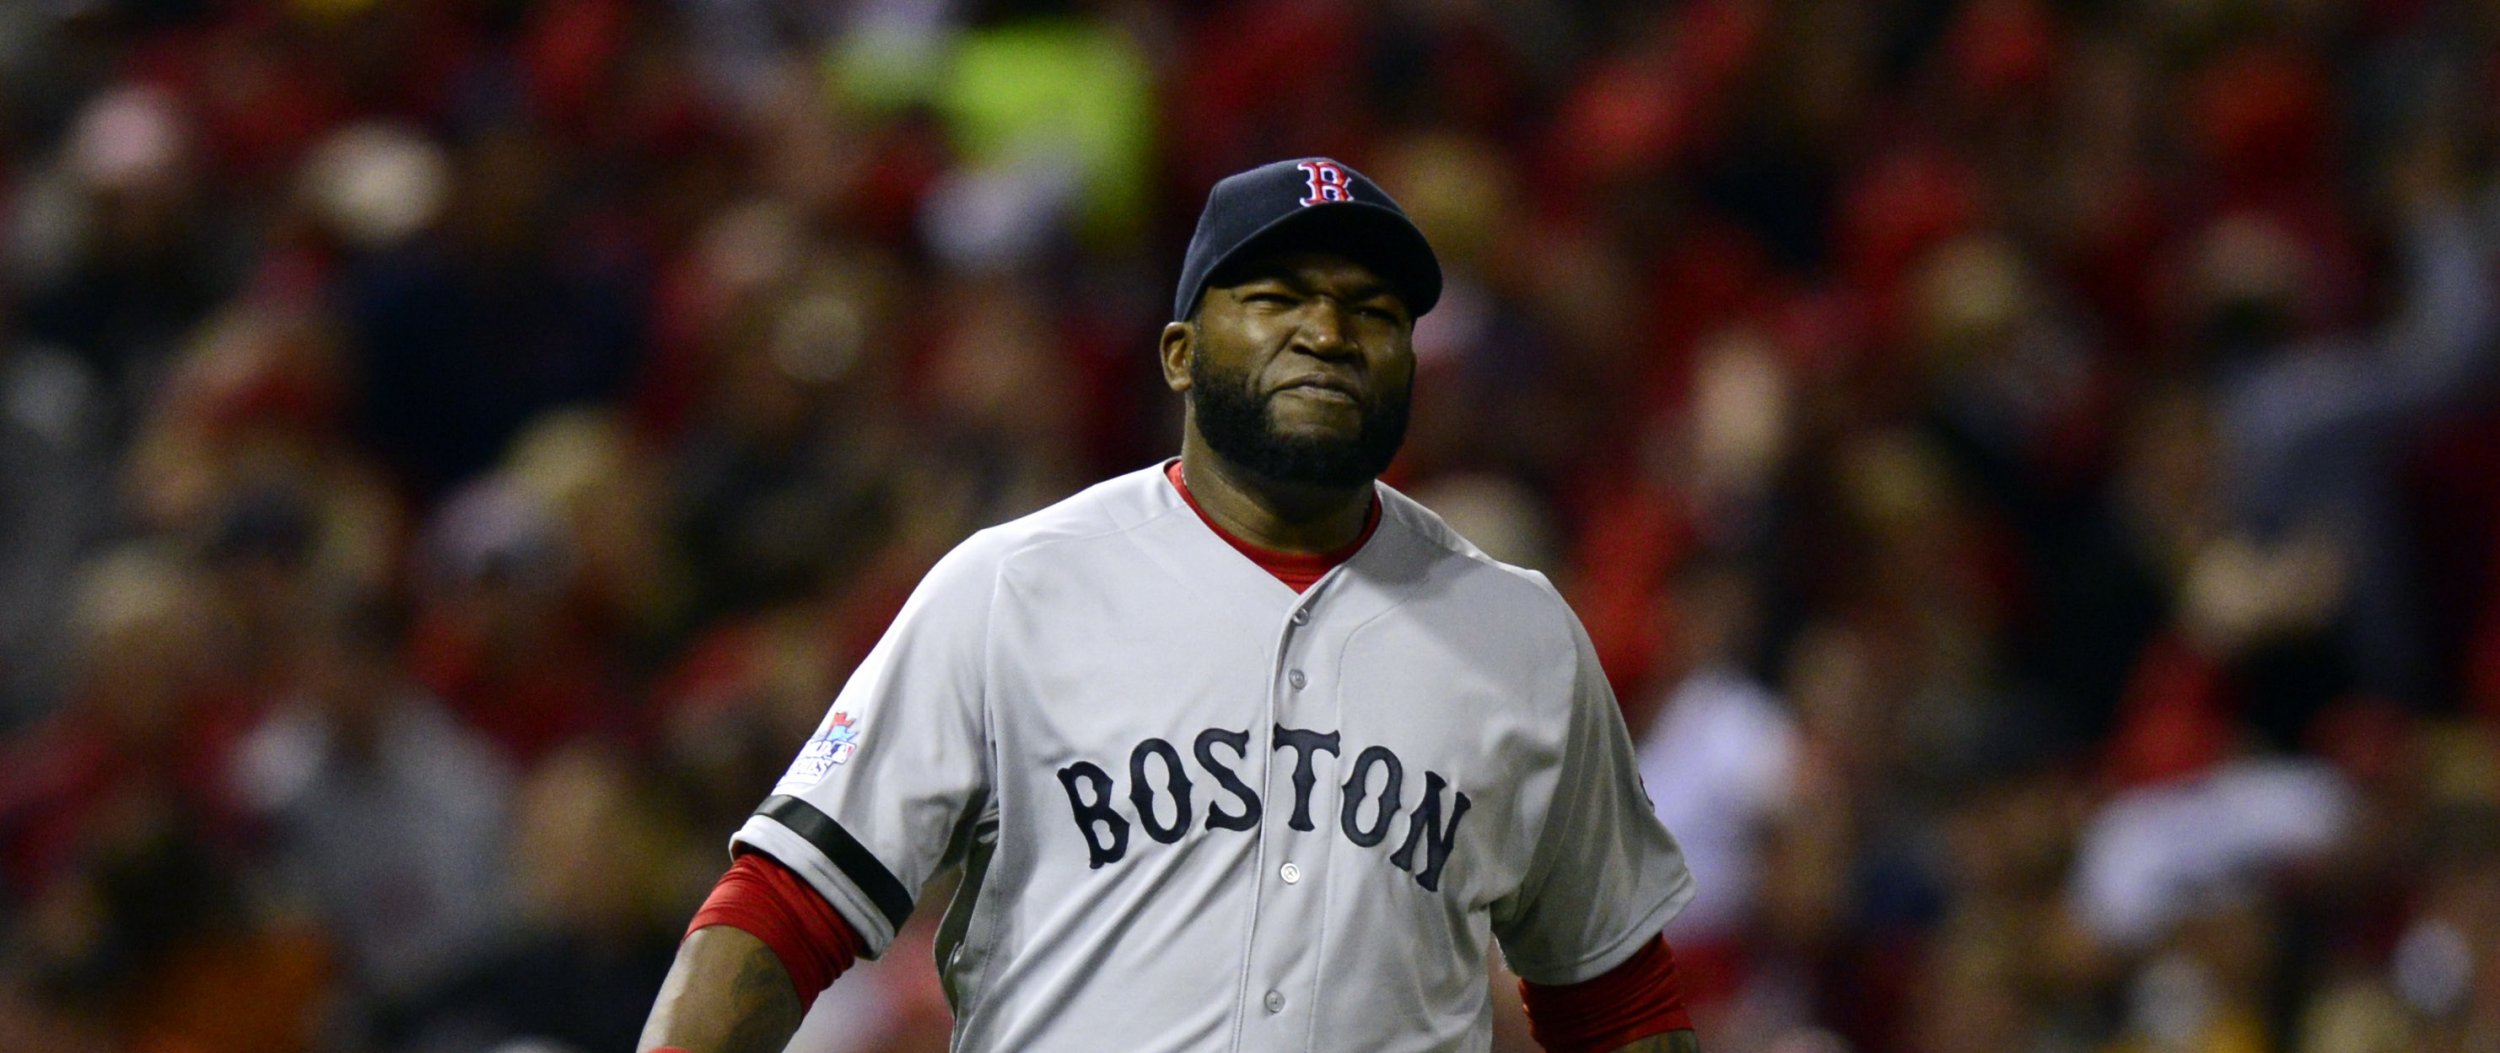 David 'Goliath' Ortiz clinches sweep for Red Sox - The Boston Globe